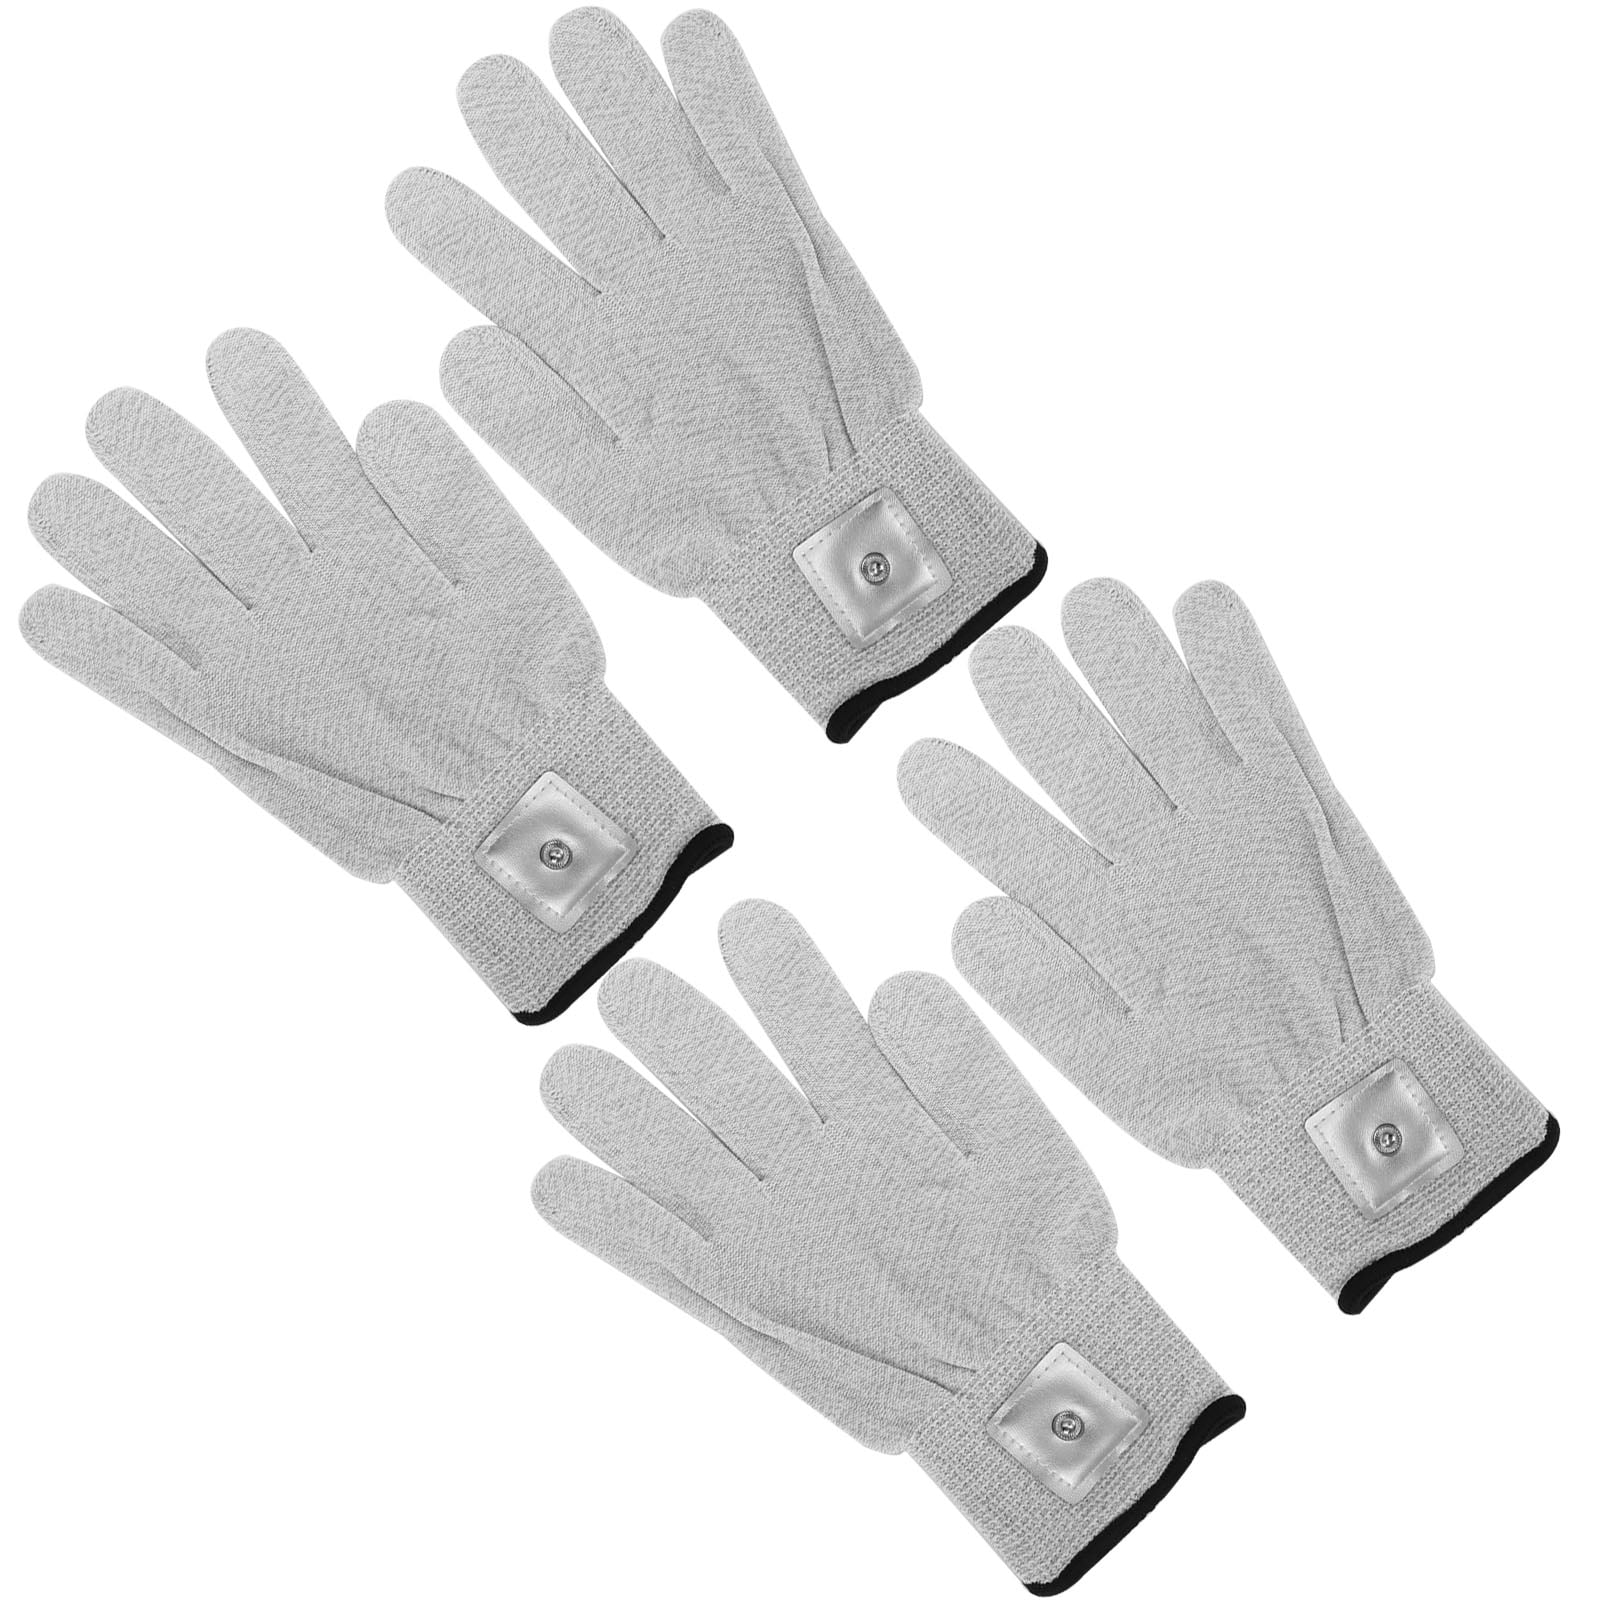 Tens 7000 Conductive Tens Gloves, 2 Pack - for Arthritis, Trigger Finger, Poor C